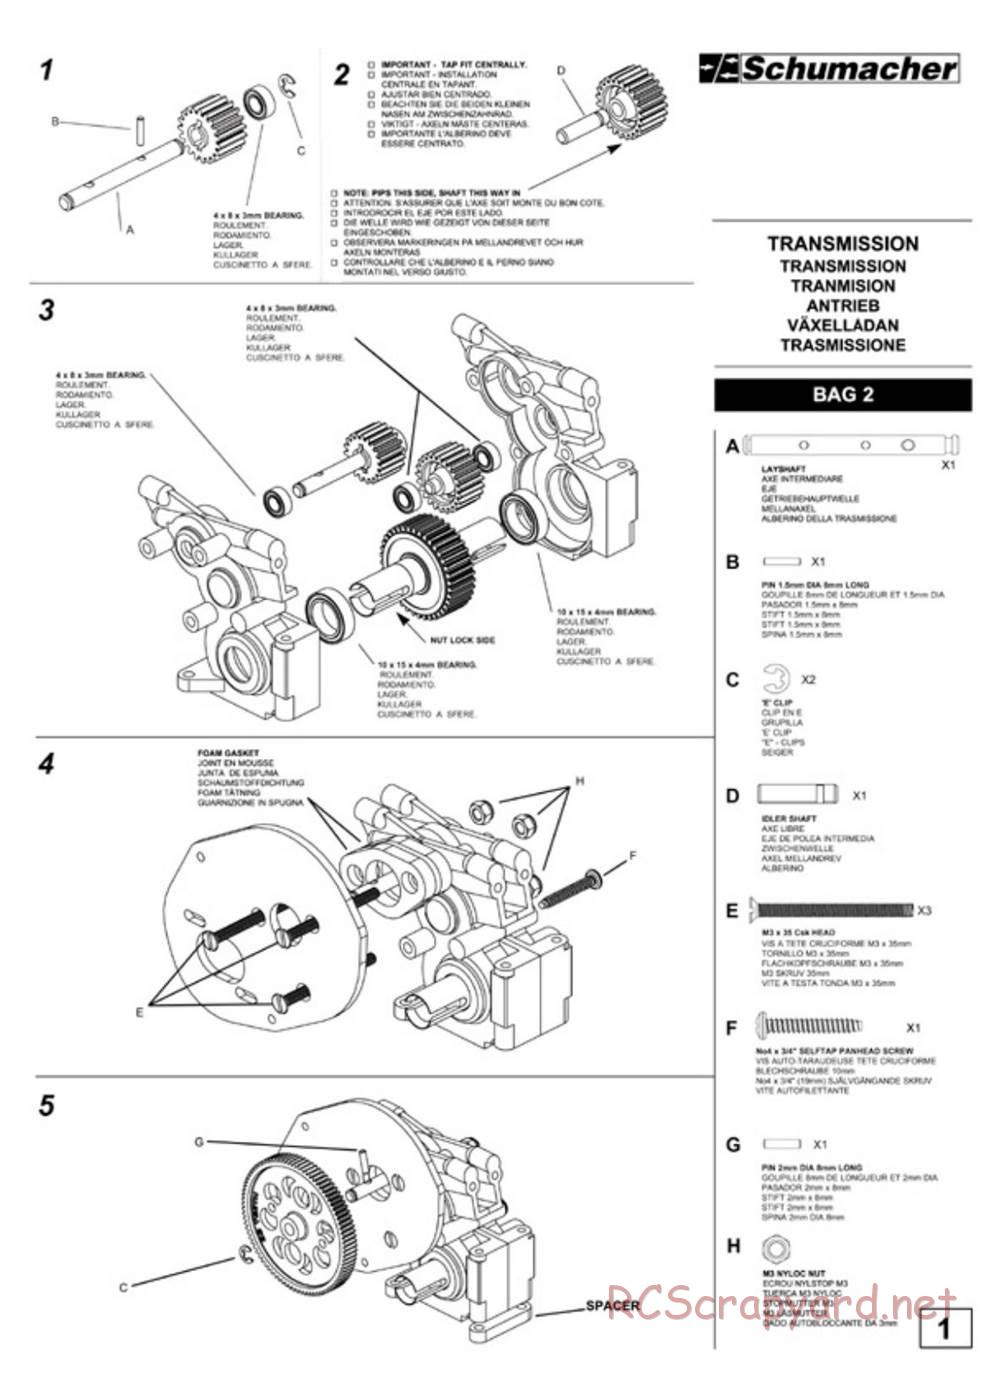 Schumacher - Fireblade Evo - Manual - Page 3